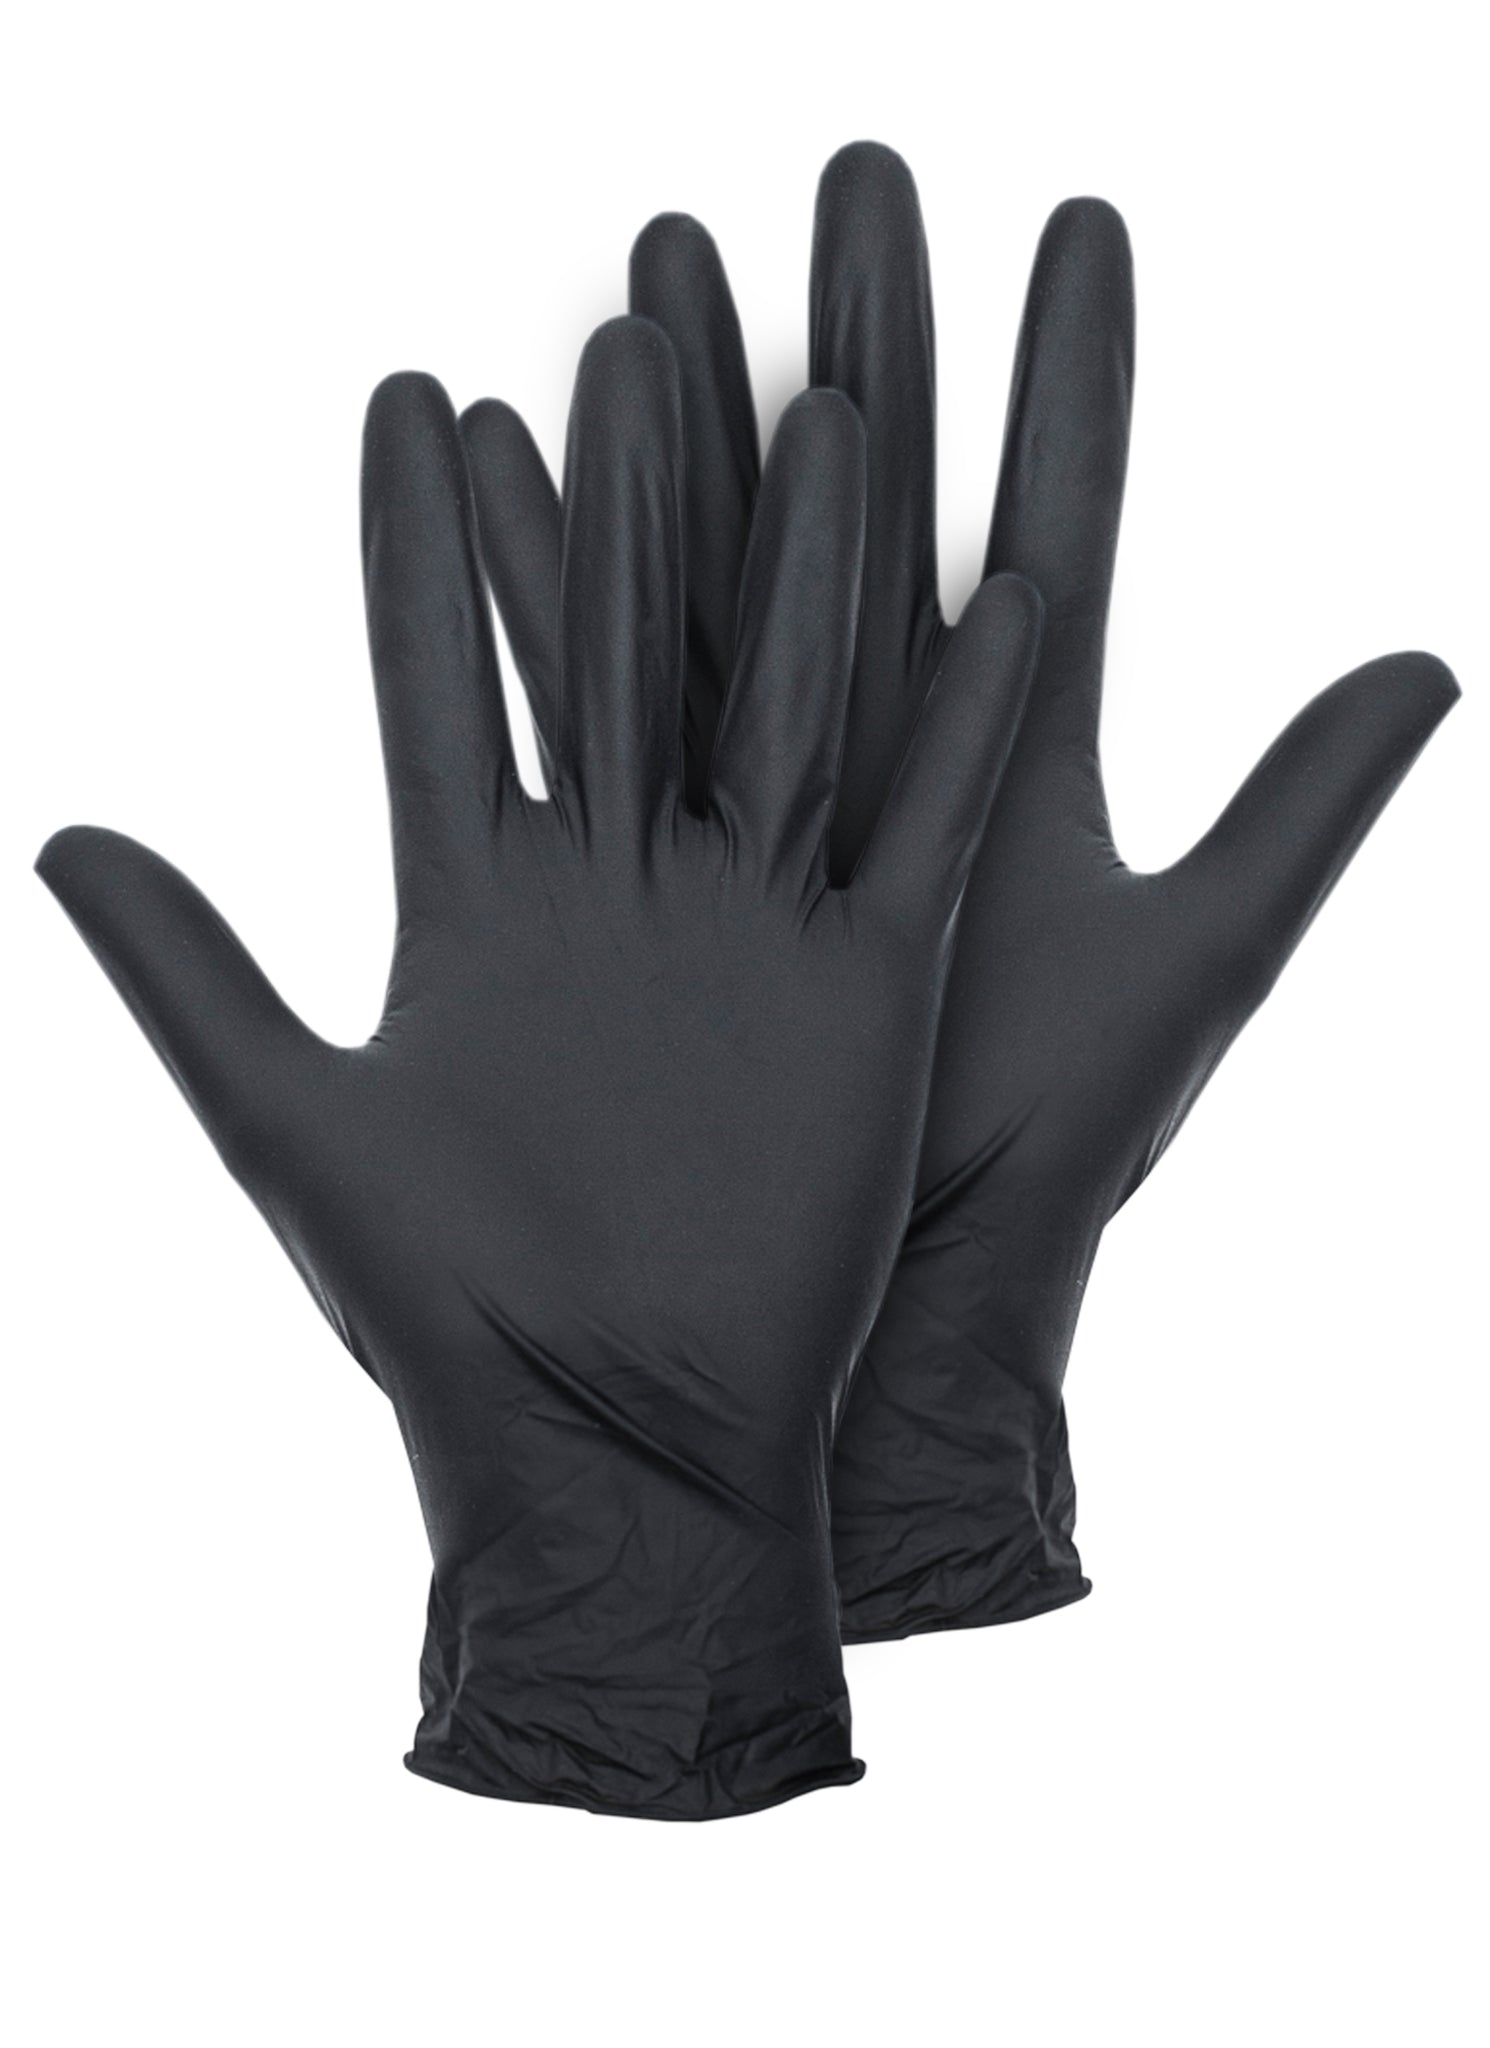 Montana - Black Latex Gloves  Size XL  Box of 100